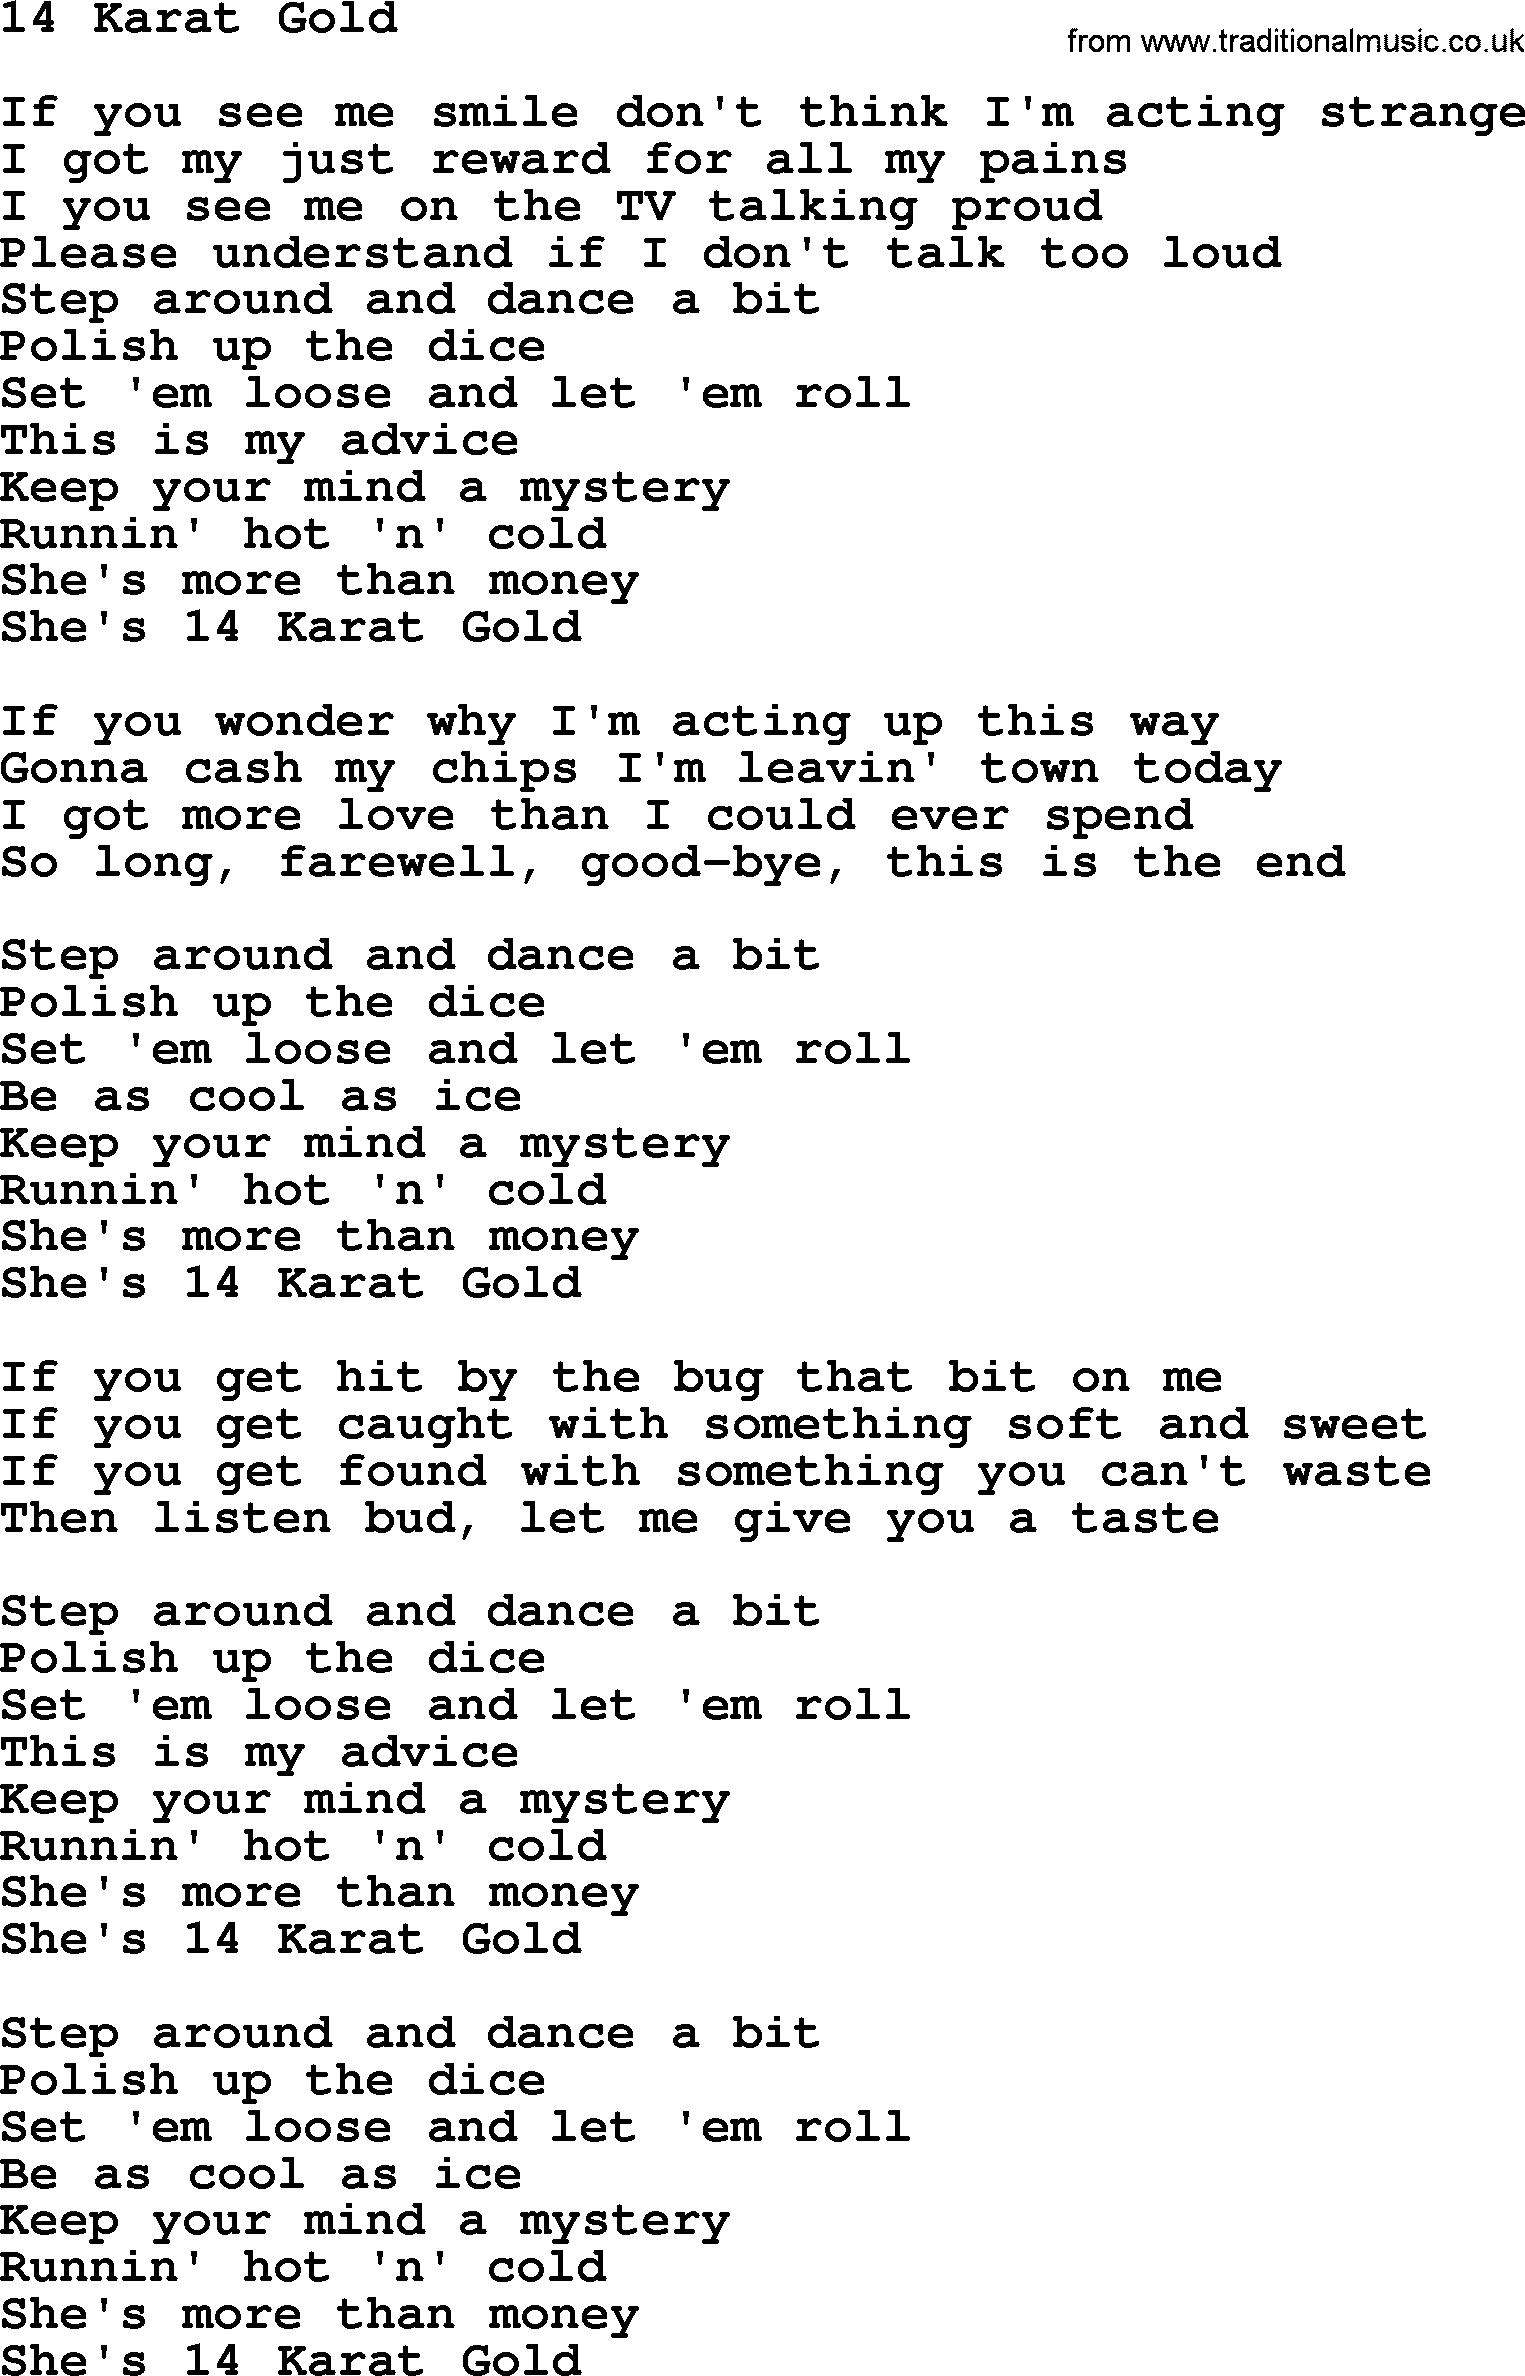 Gordon Lightfoot song 14 Karat Gold, lyrics